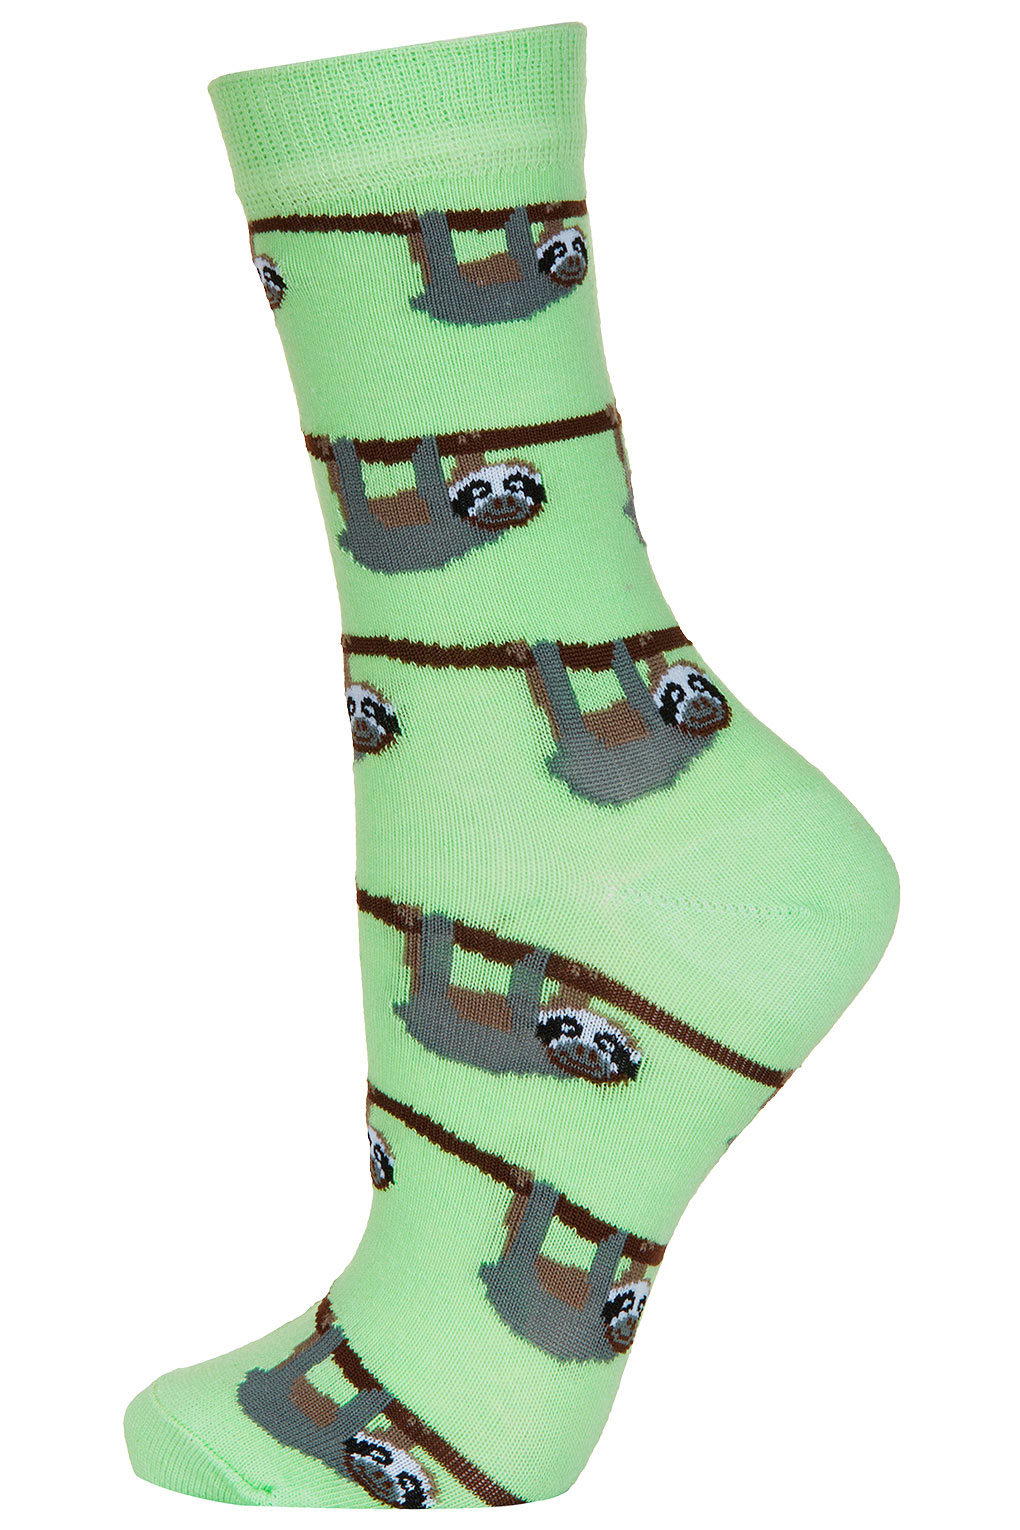 Lyst - Topshop Sloths Ankle Socks in Green